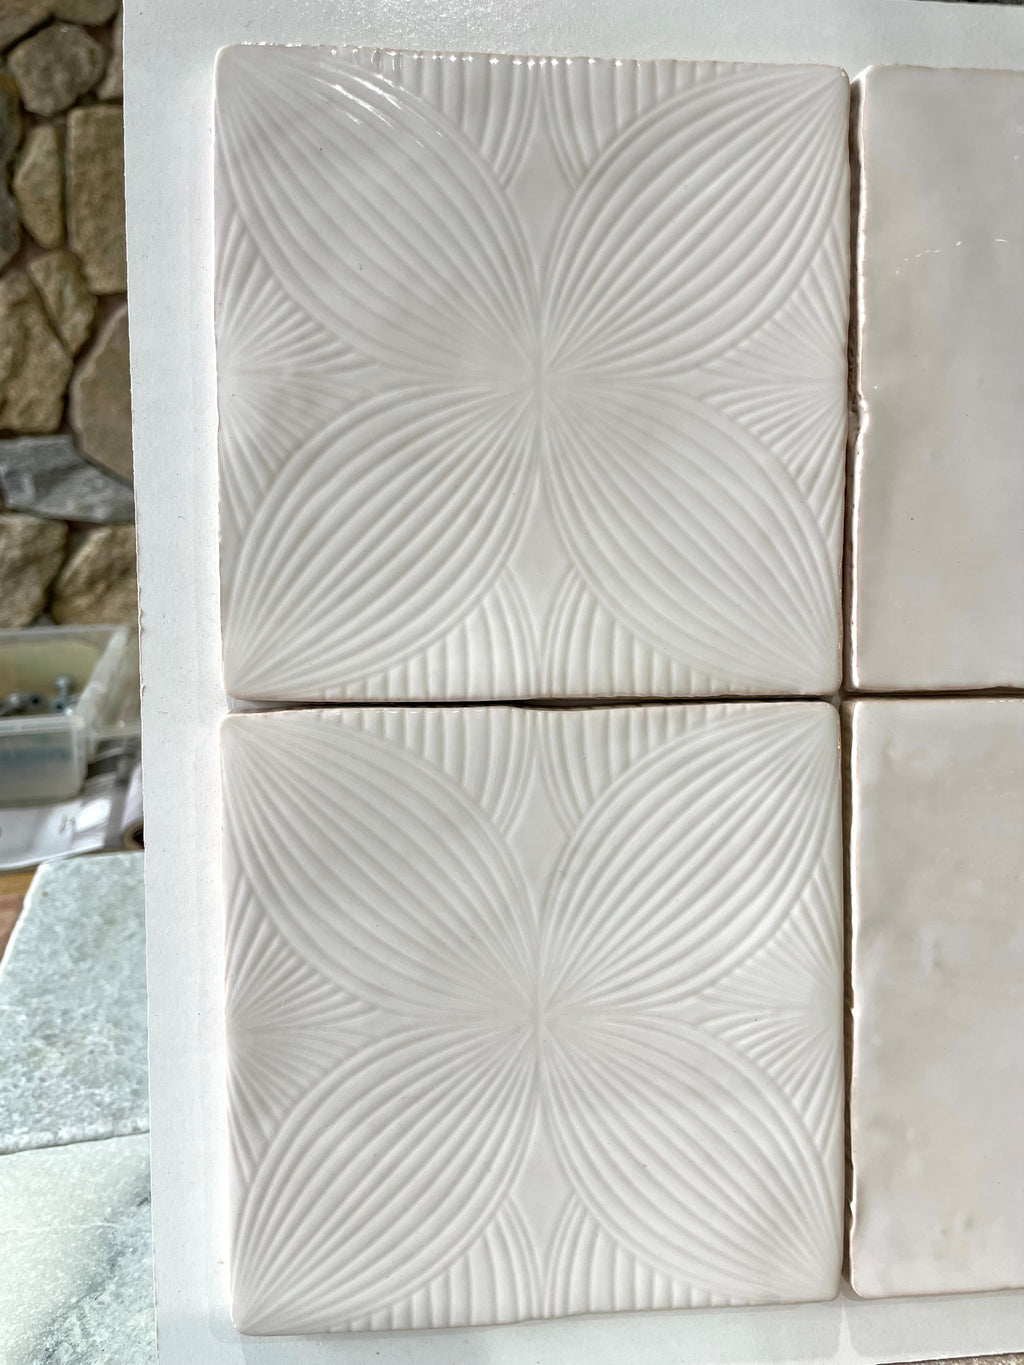 Melody Leilani Ceramic Tiles 130x130x7mm